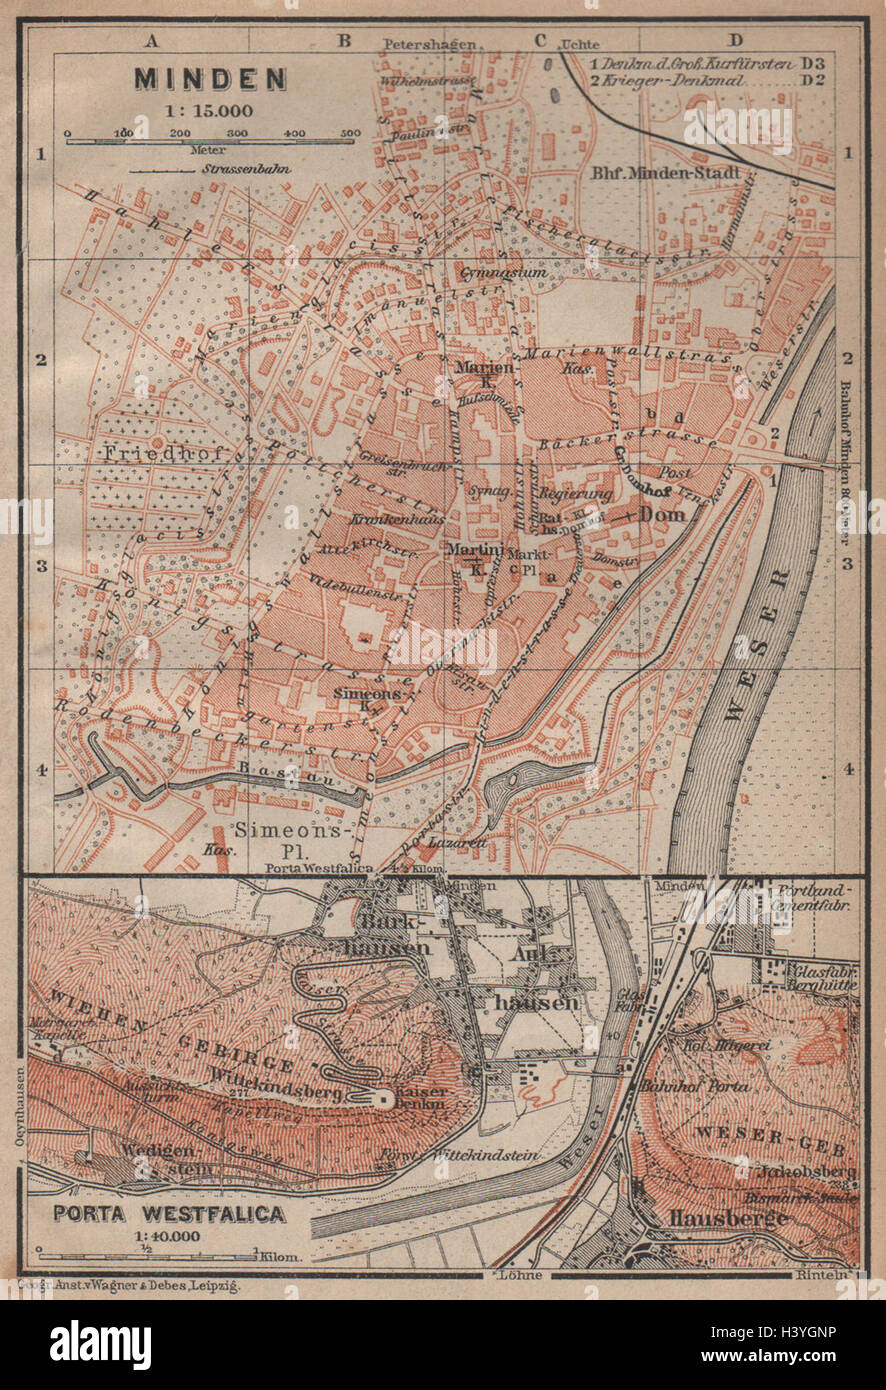 MINDEN antique town city stadtplan. Porta Westfalica. Germany. BAEDEKER 1904 map Stock Photo